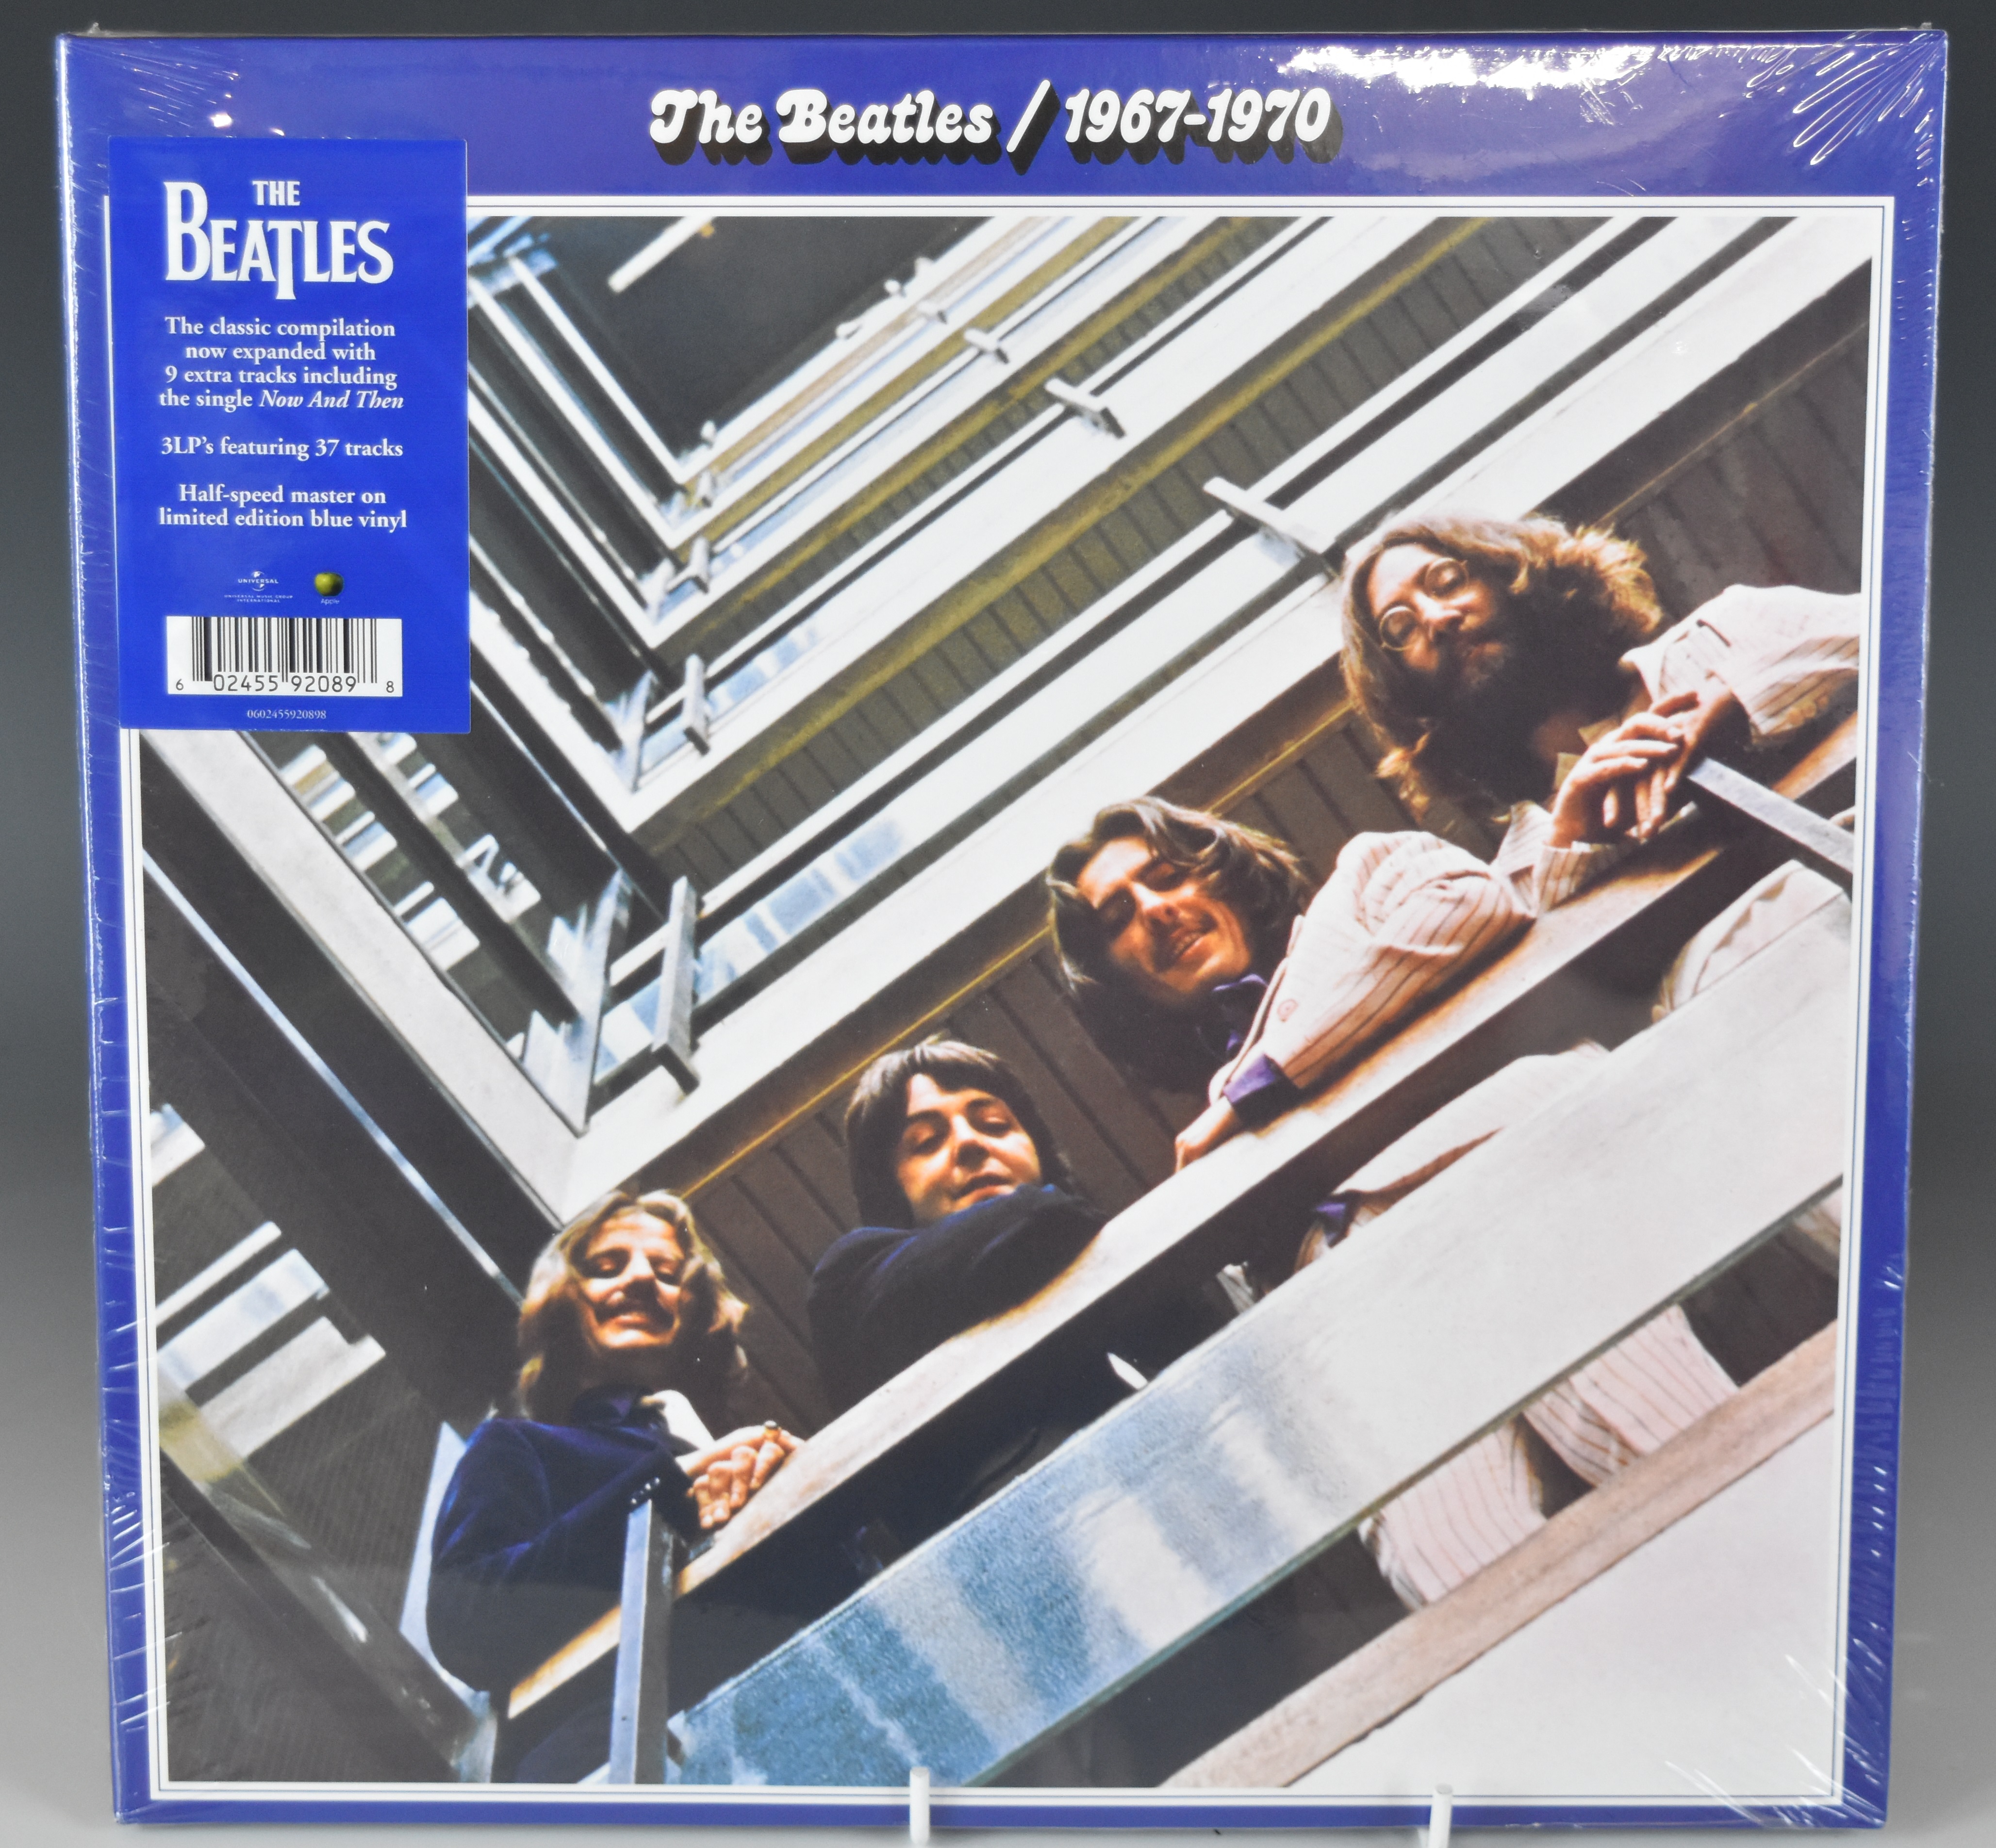 The Beatles 1967-1970 triple album, half speed master on limited edition blue vinyl, still sealed in